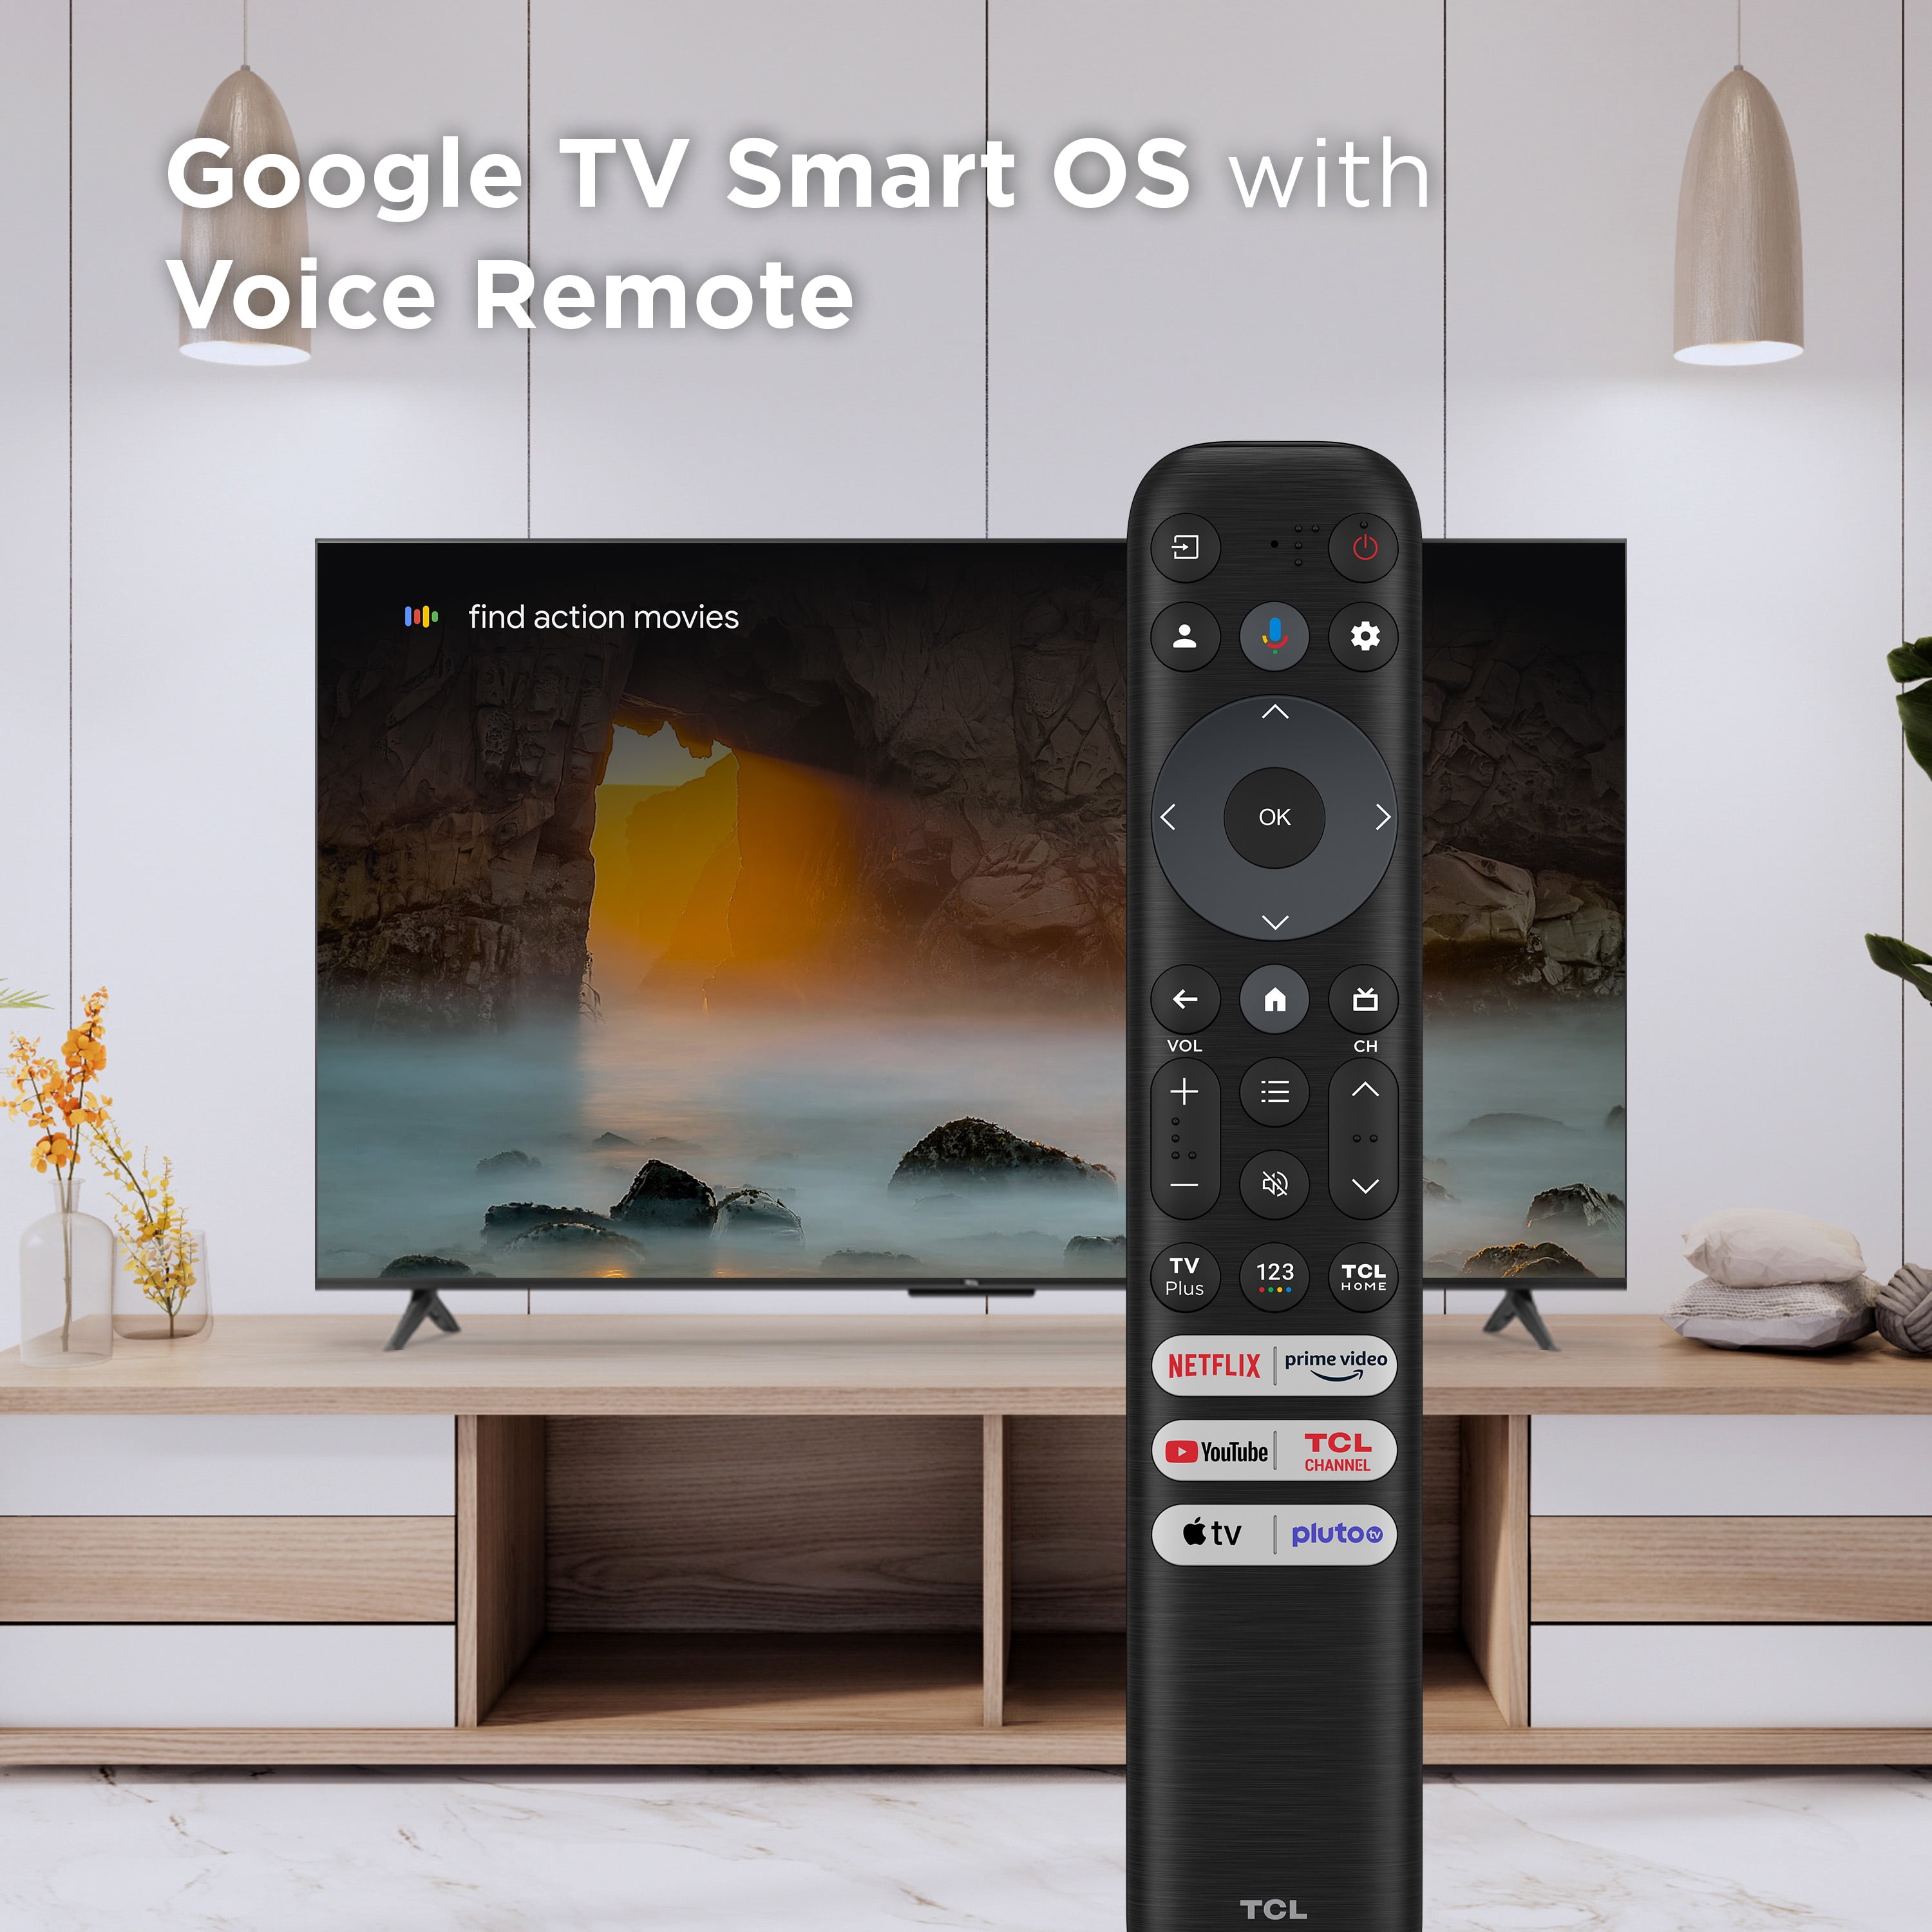 Smart TV TCL 50 4K - Android Tv - Asistente Google - Tecnopro